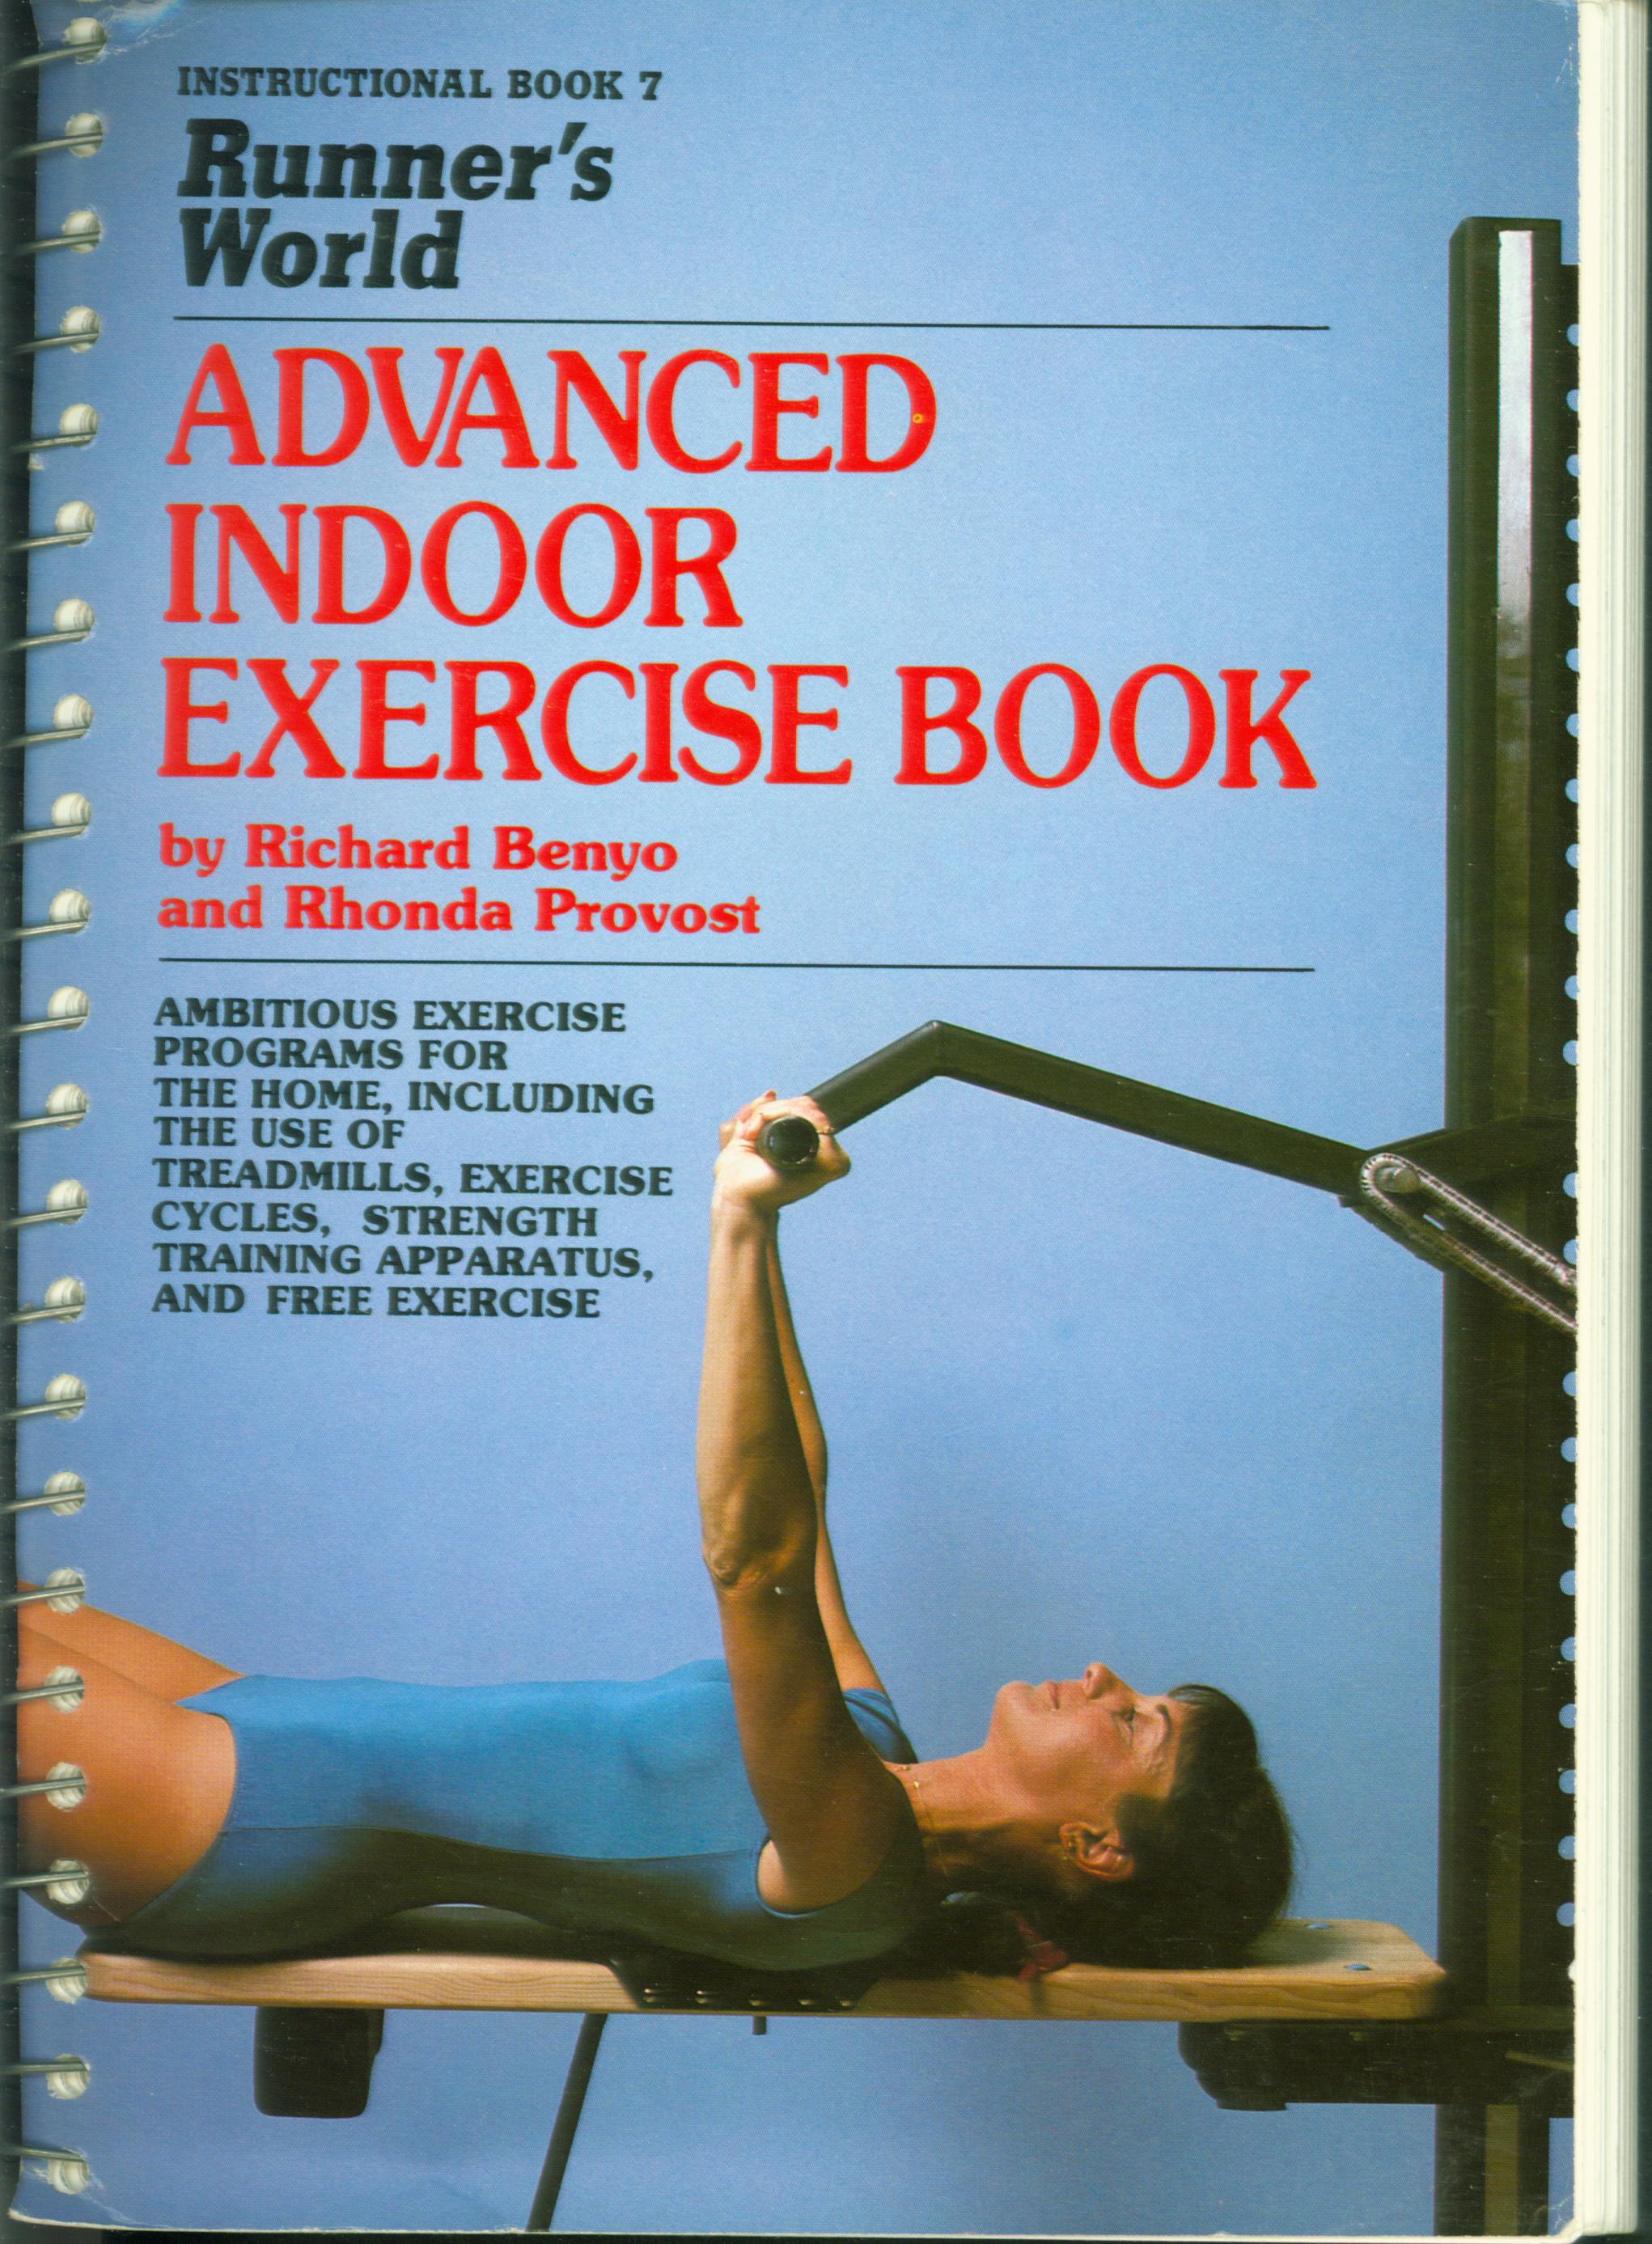 RUNNER'S WORLD ADVANCED INDOOR EXERCISE BOOK. 